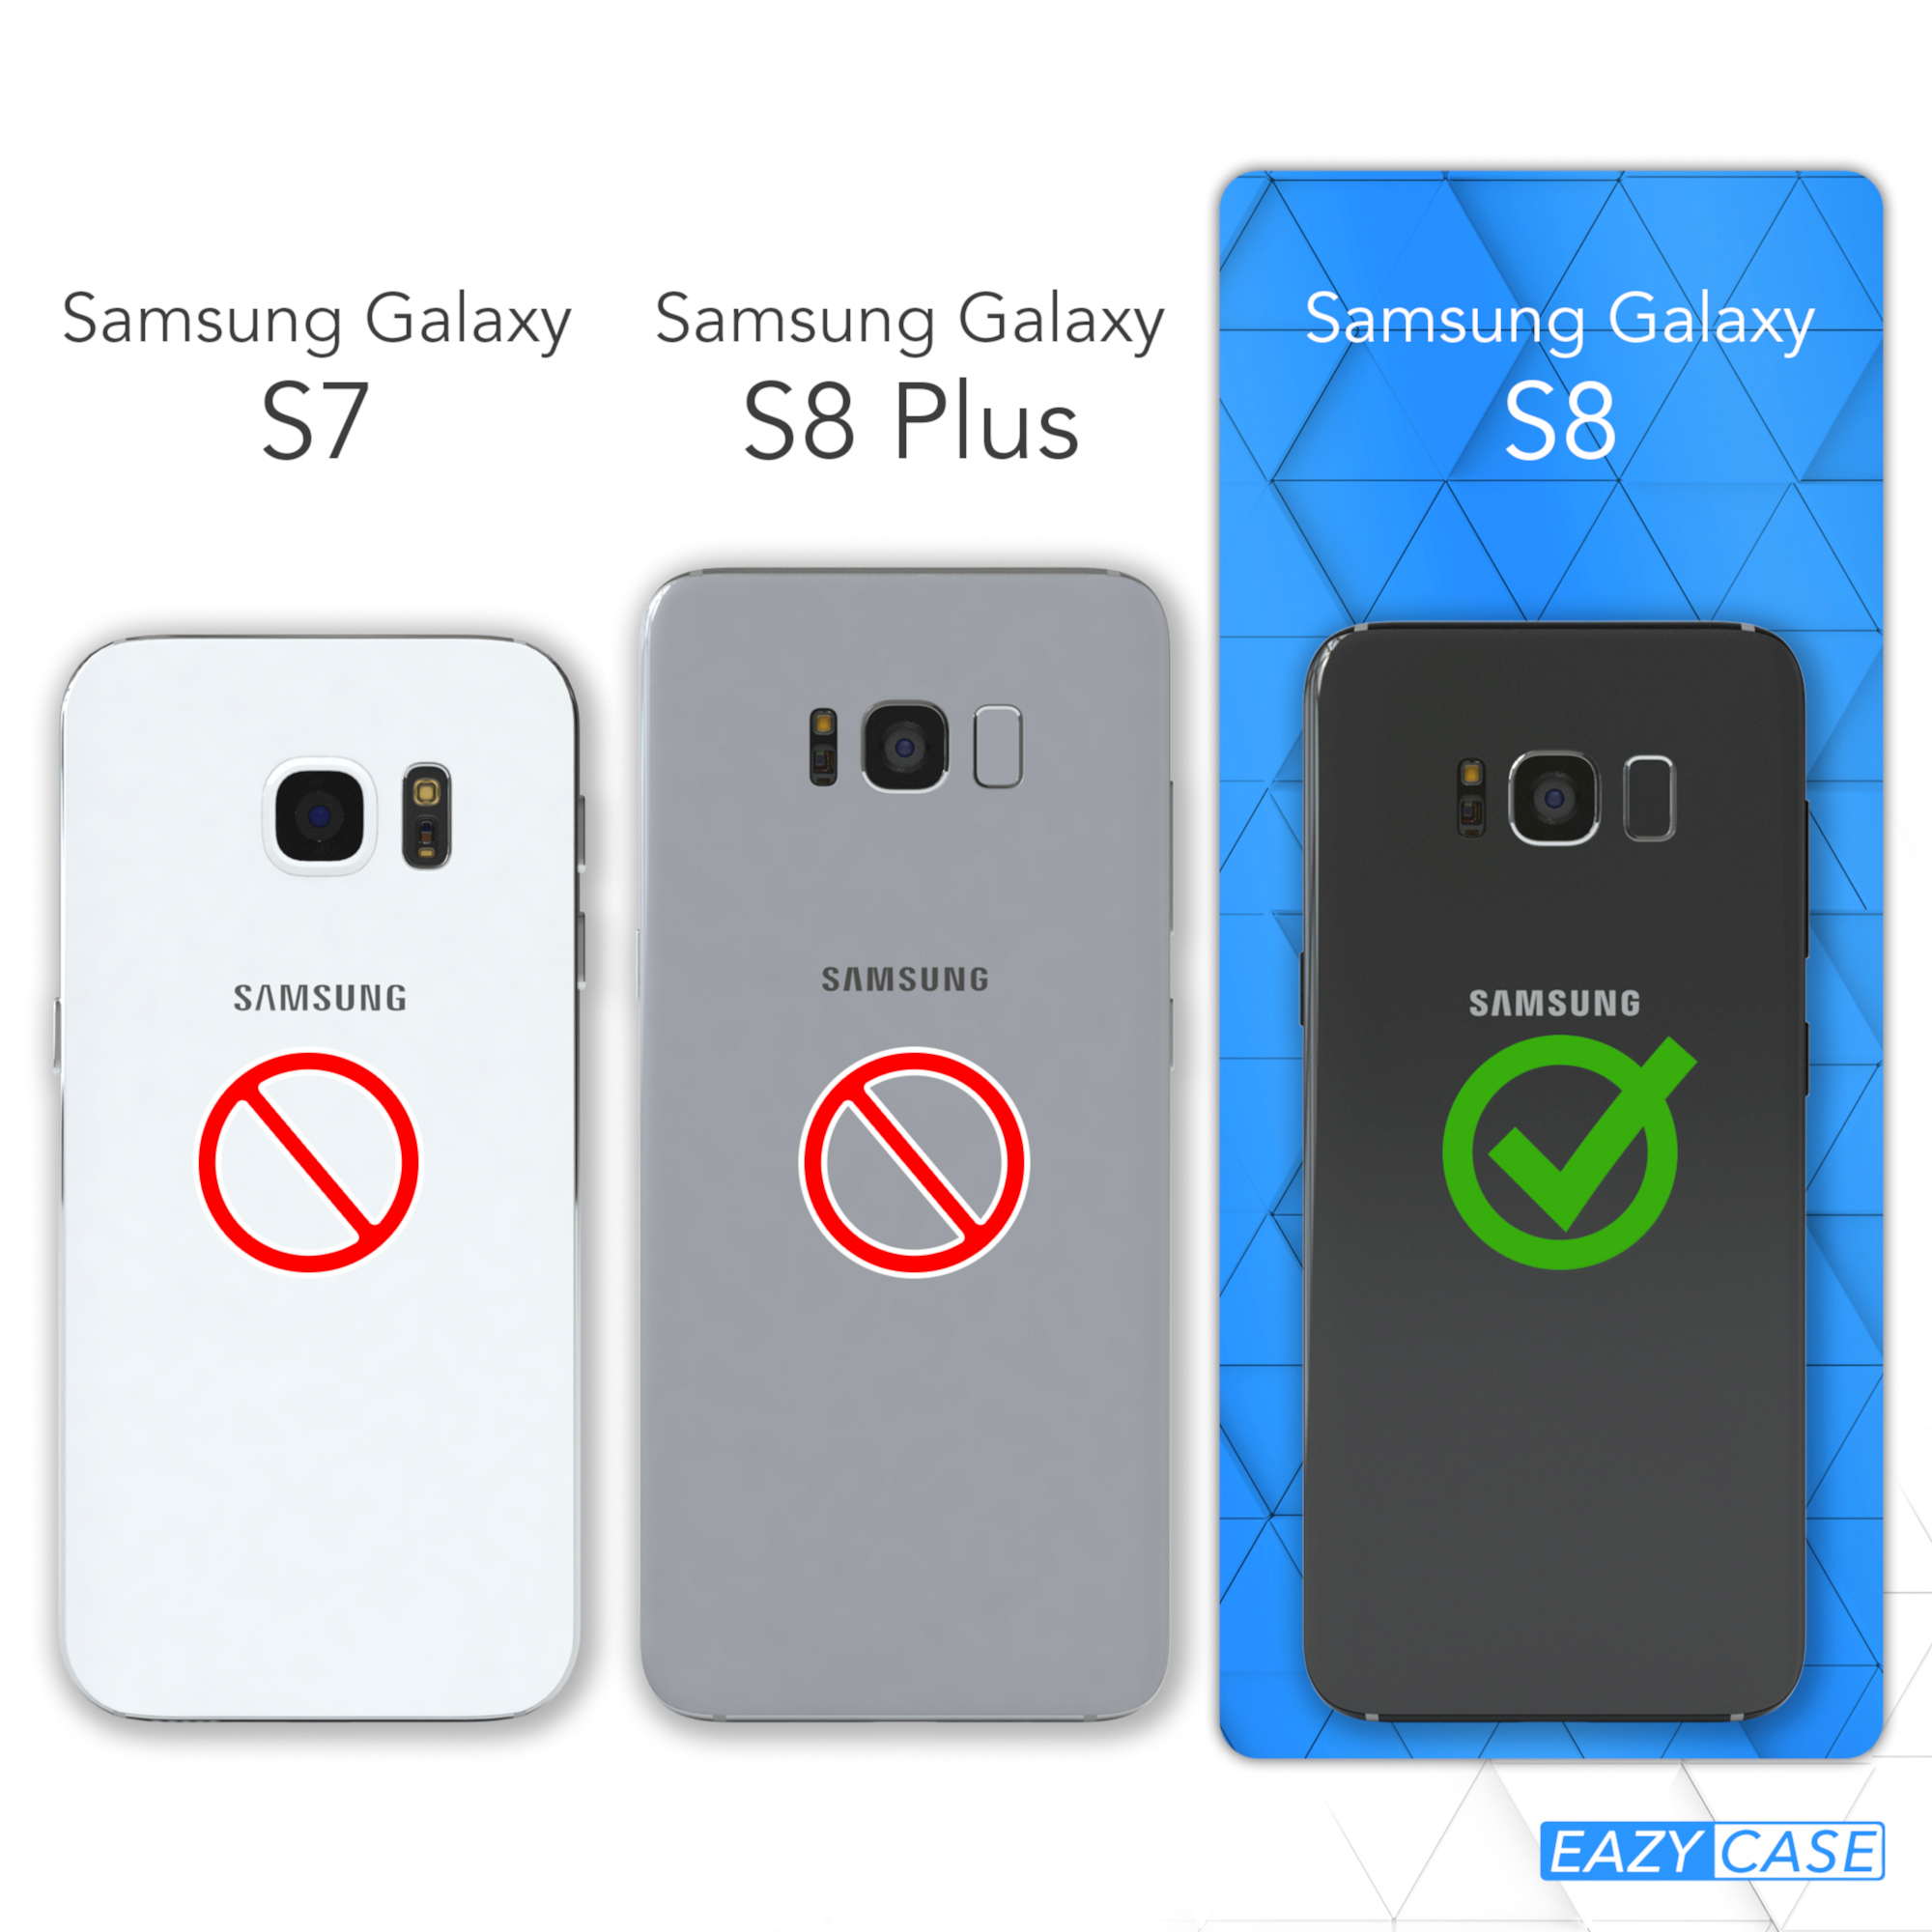 / Galaxy CASE normal, Silber Chain S8, Clips Bordeaux EAZY Umhängetasche, Rot Samsung,